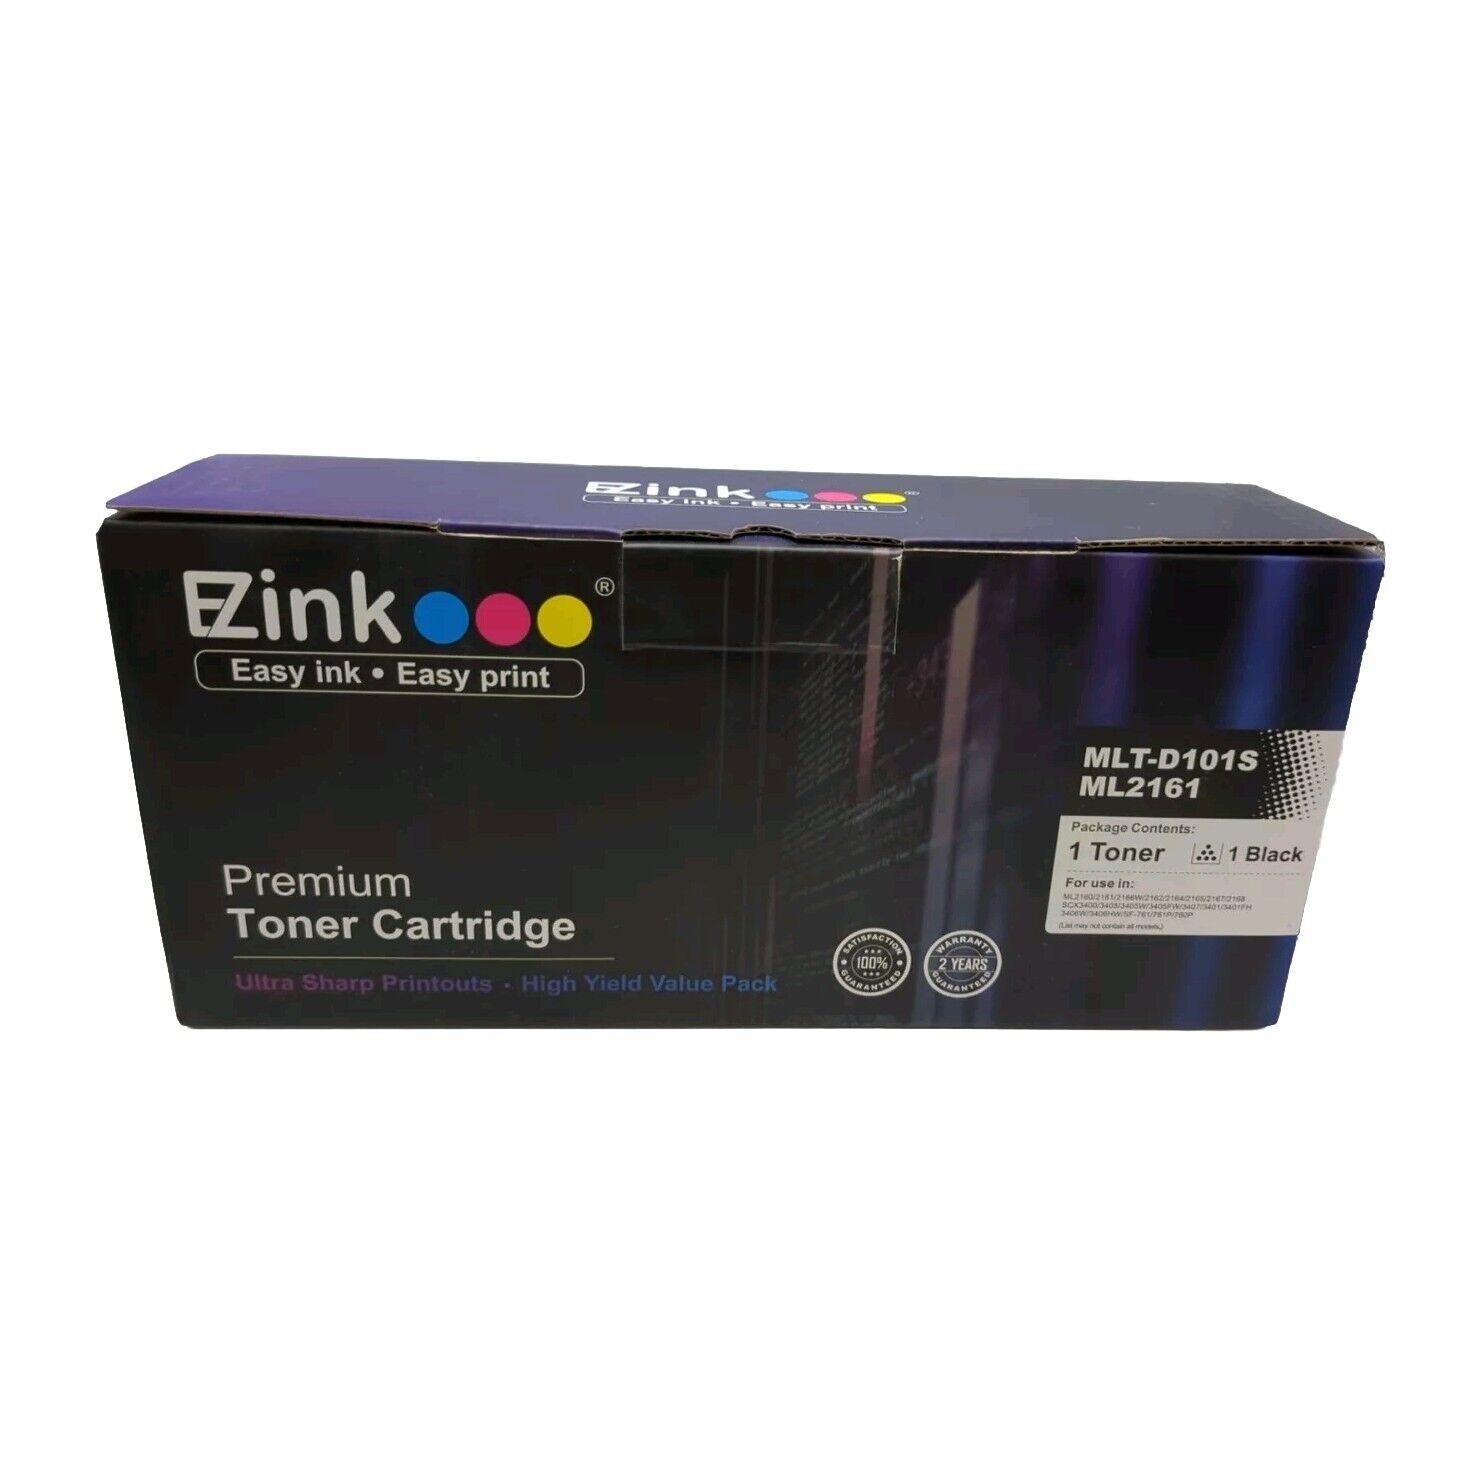 EZink Premium Toner Cartridge Black MLT-D101S; ML2161